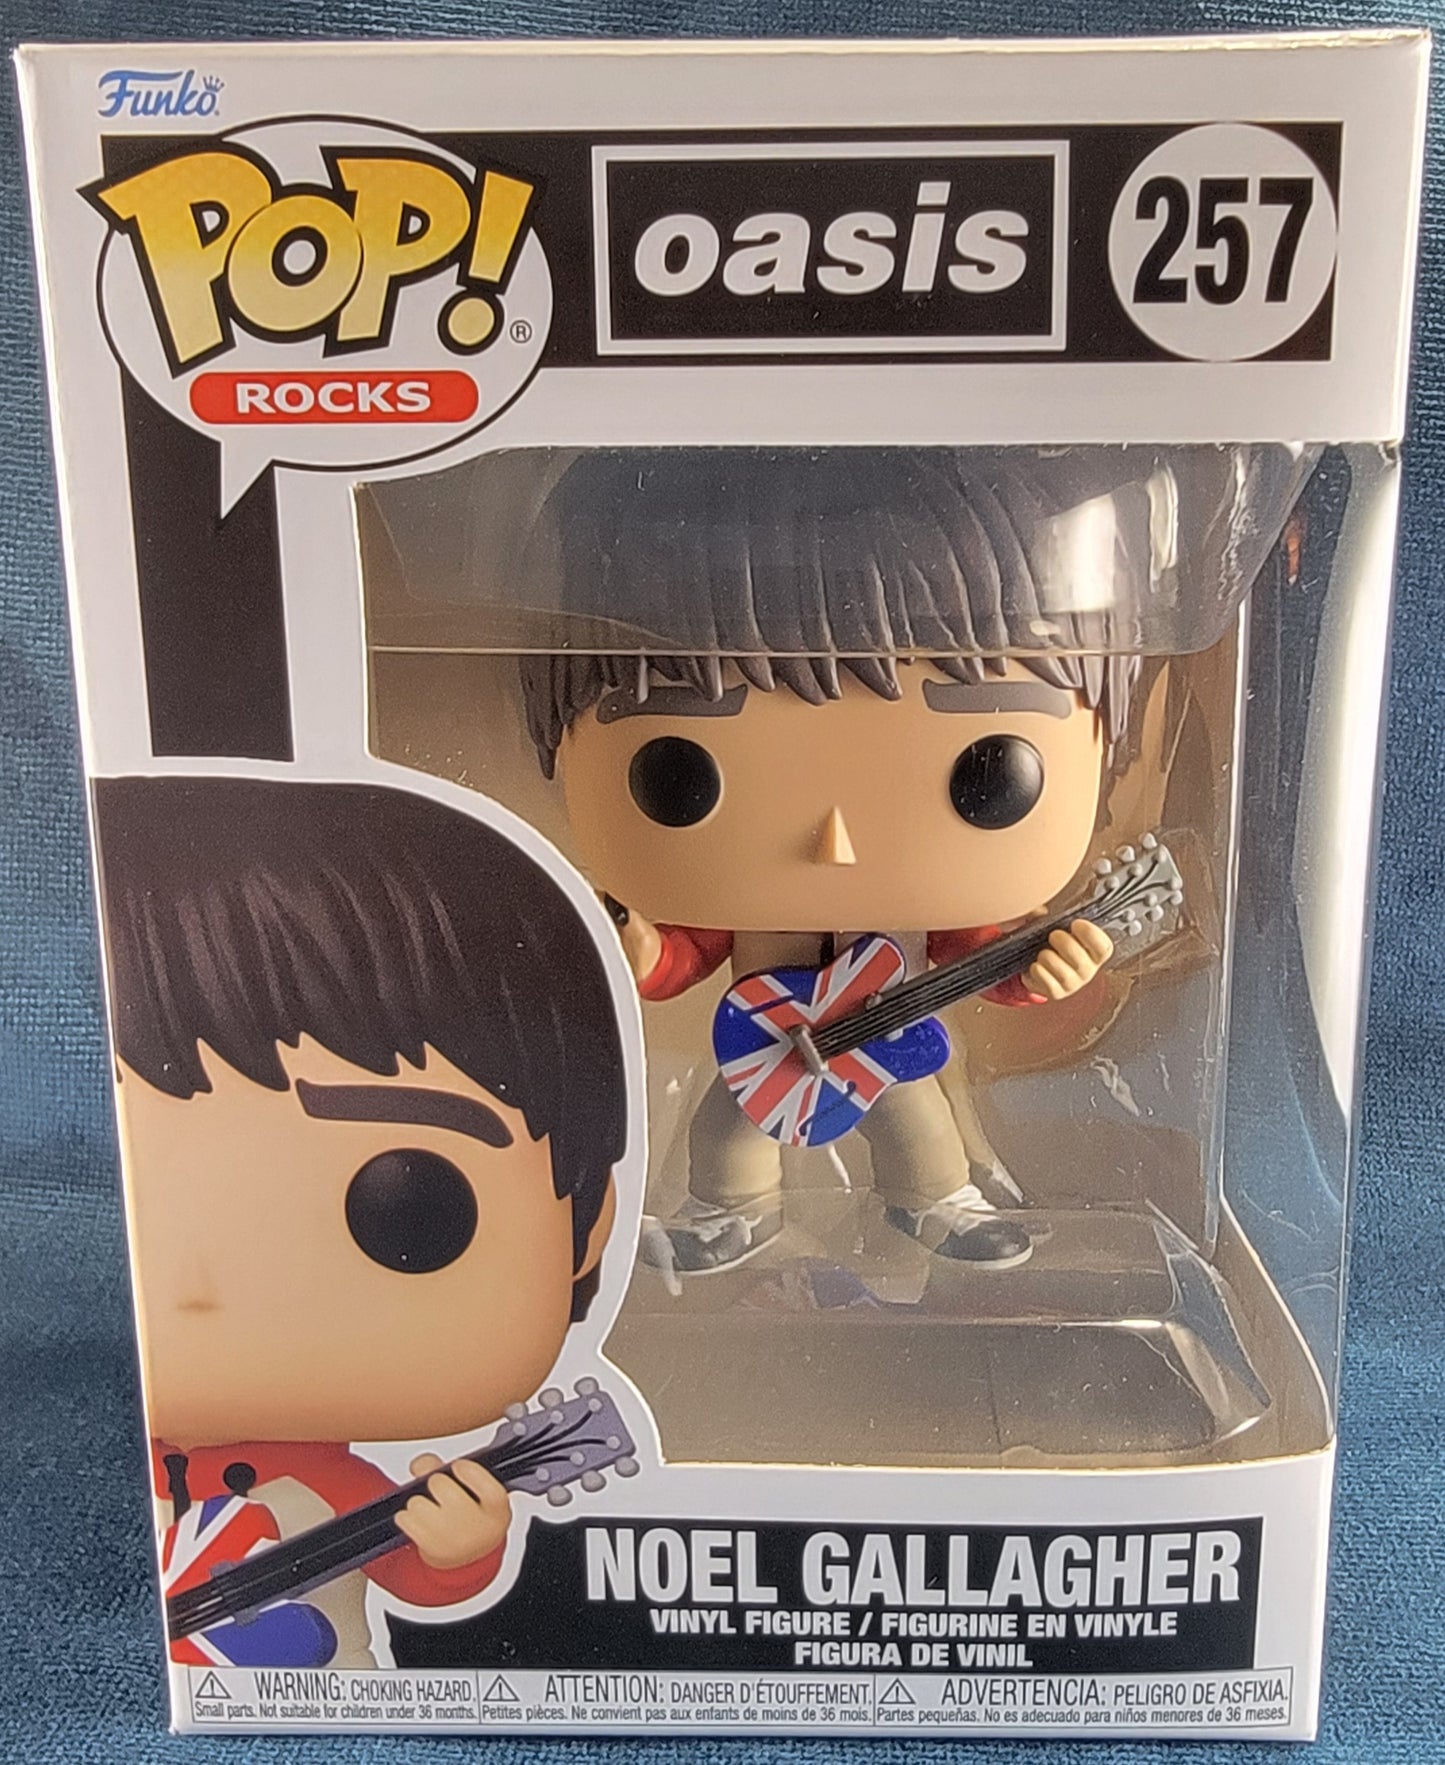 Noel Gallagher funko # 257 (nib)
With pop protector